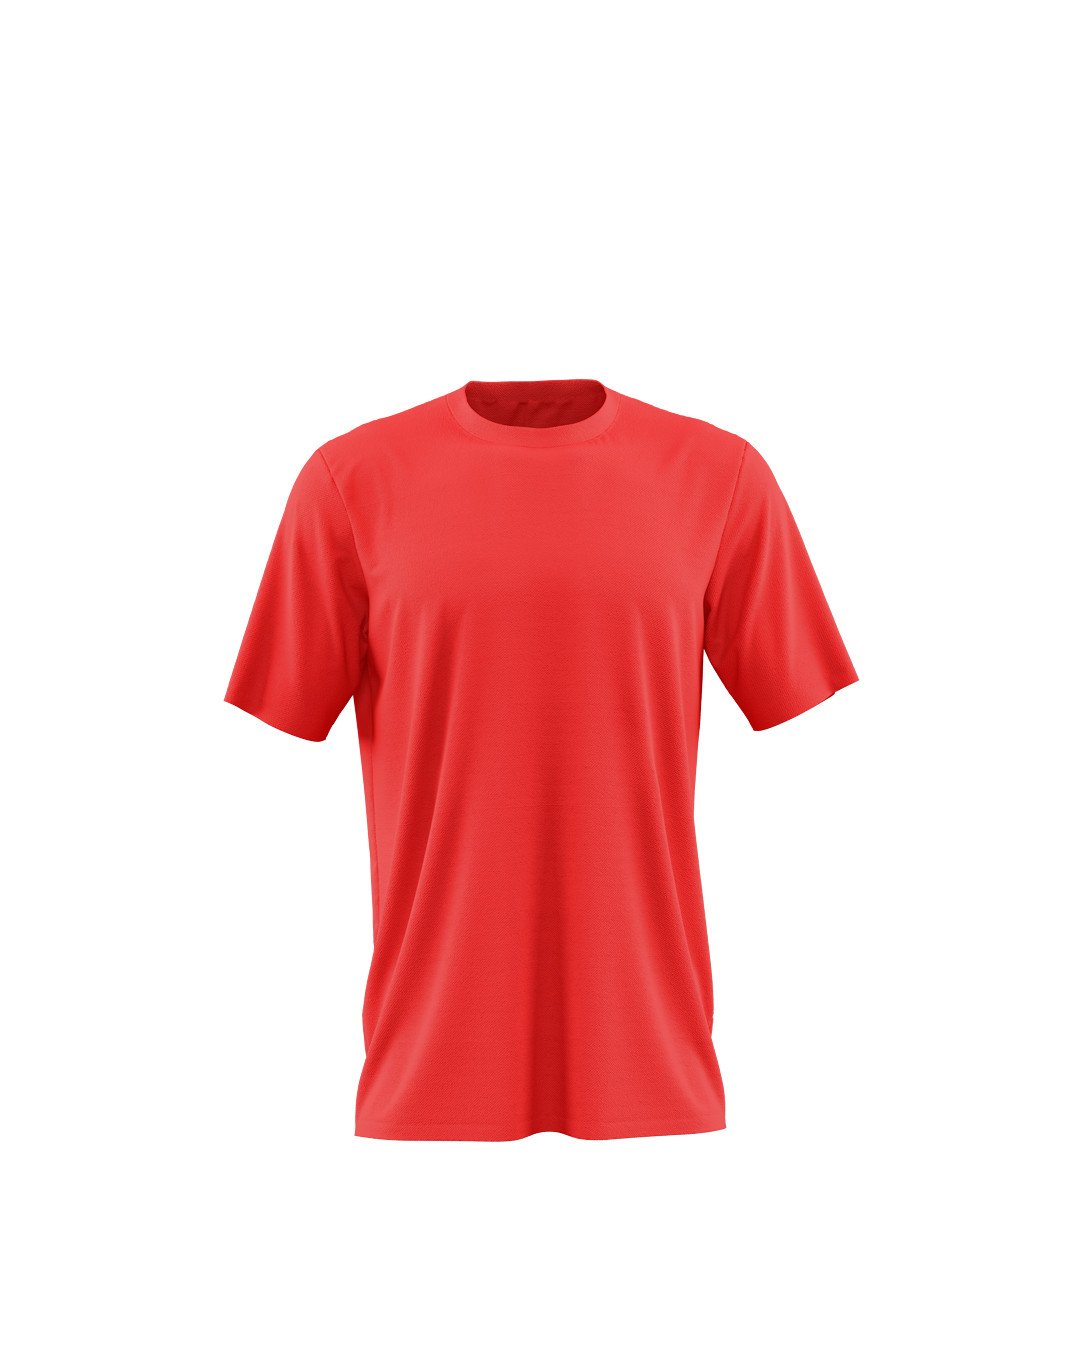 Plain Round Neck Bio-washed Super Combed Red Cotton T-Shirt